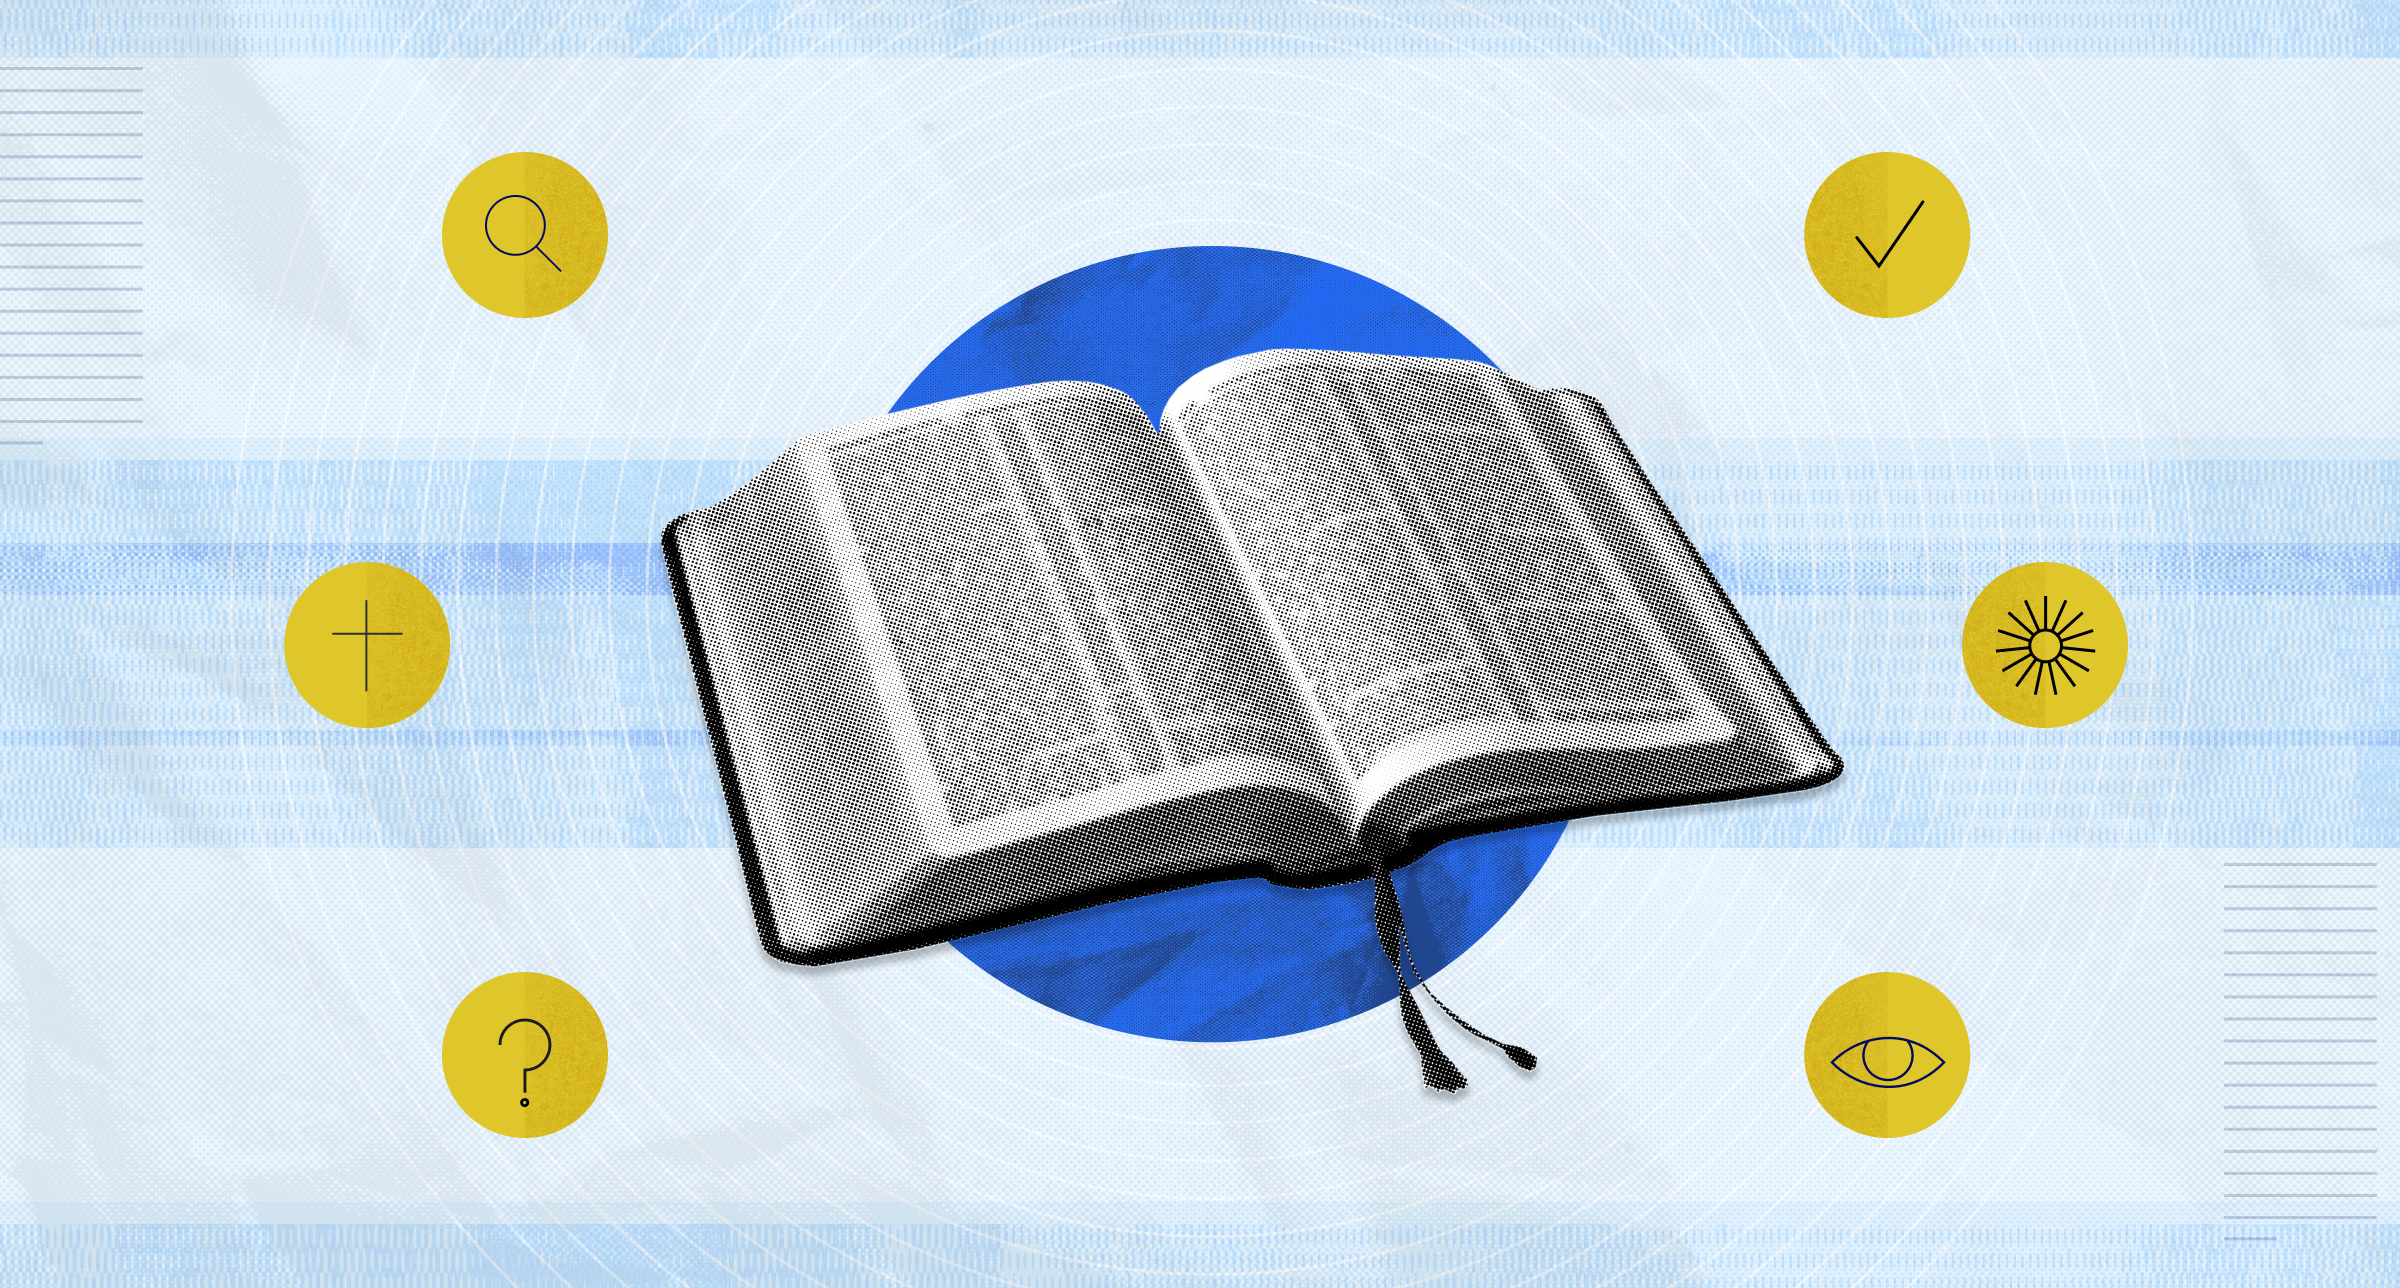 An image of an open study Bible